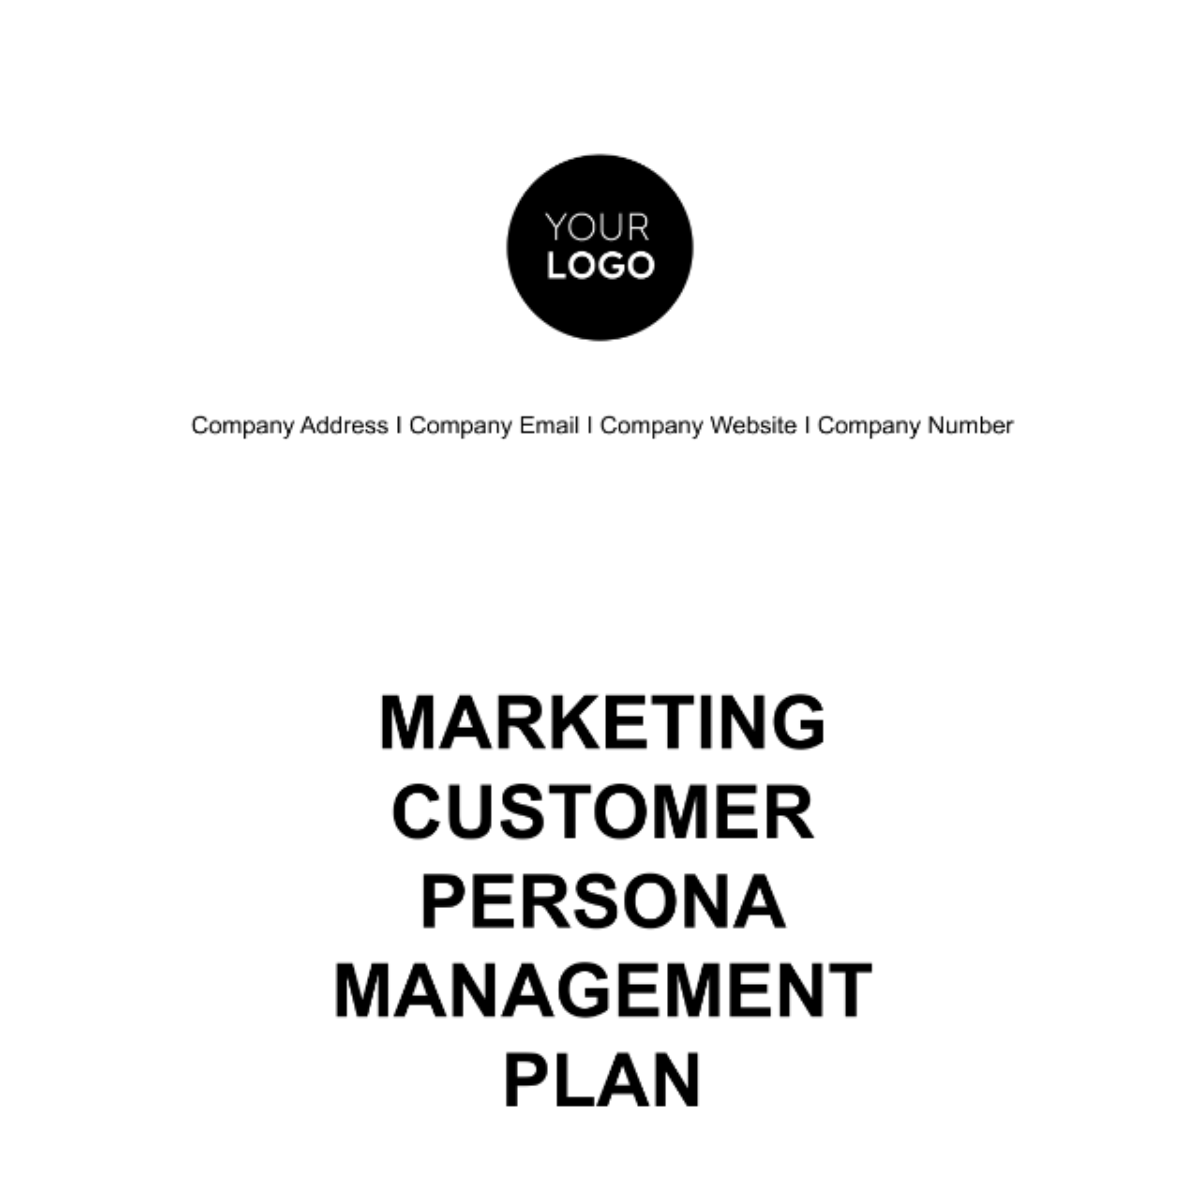 Marketing Customer Persona Management Plan Template